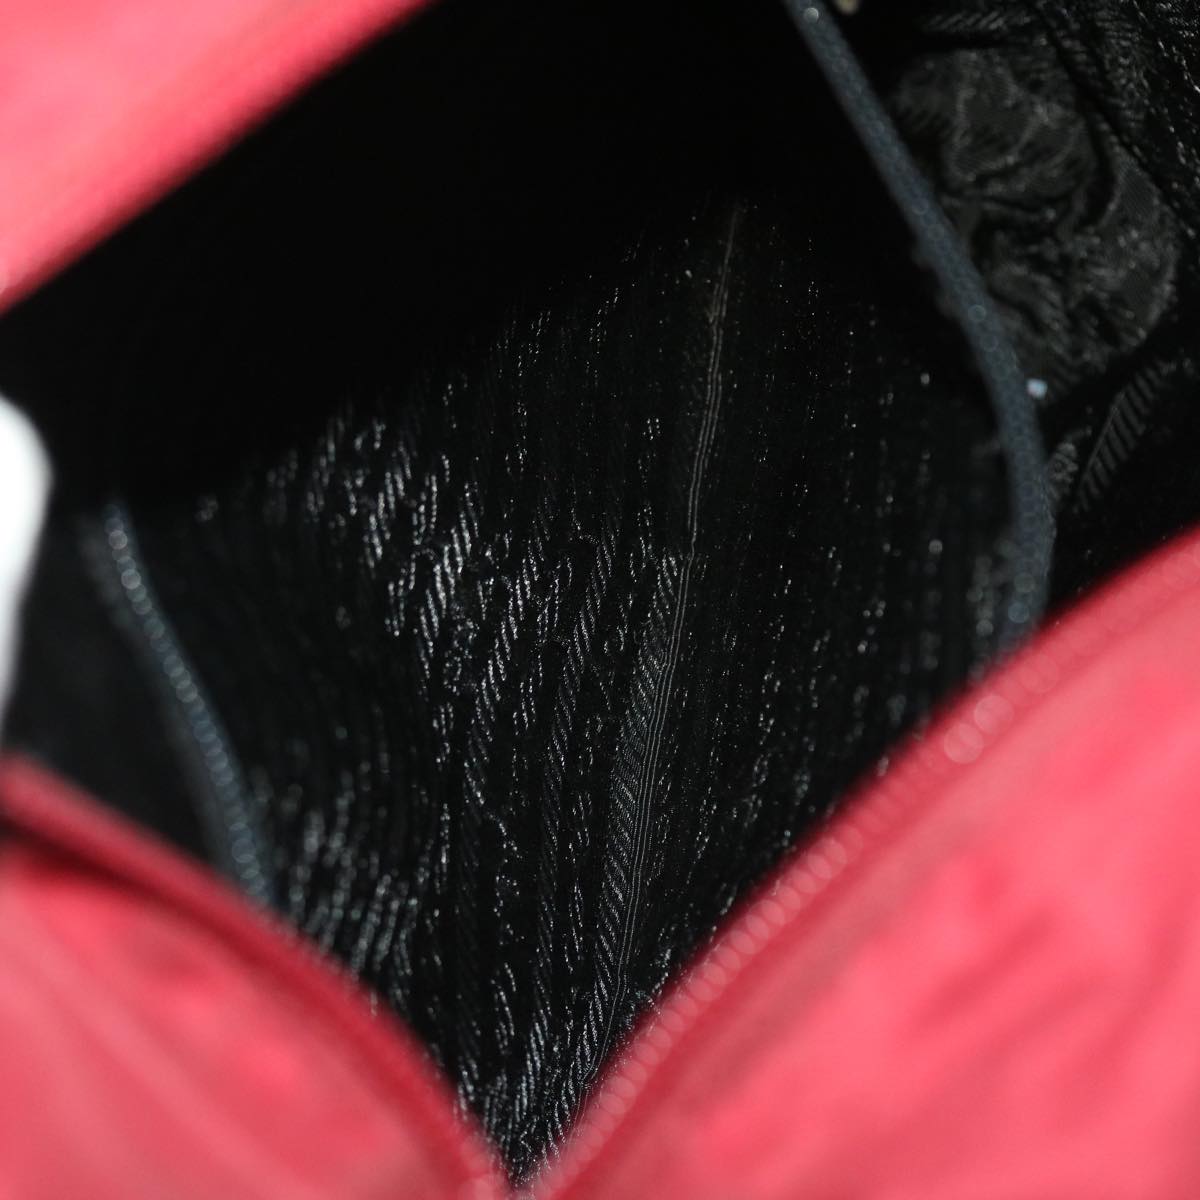 PRADA Tote Bag Nylon Red Auth 50149